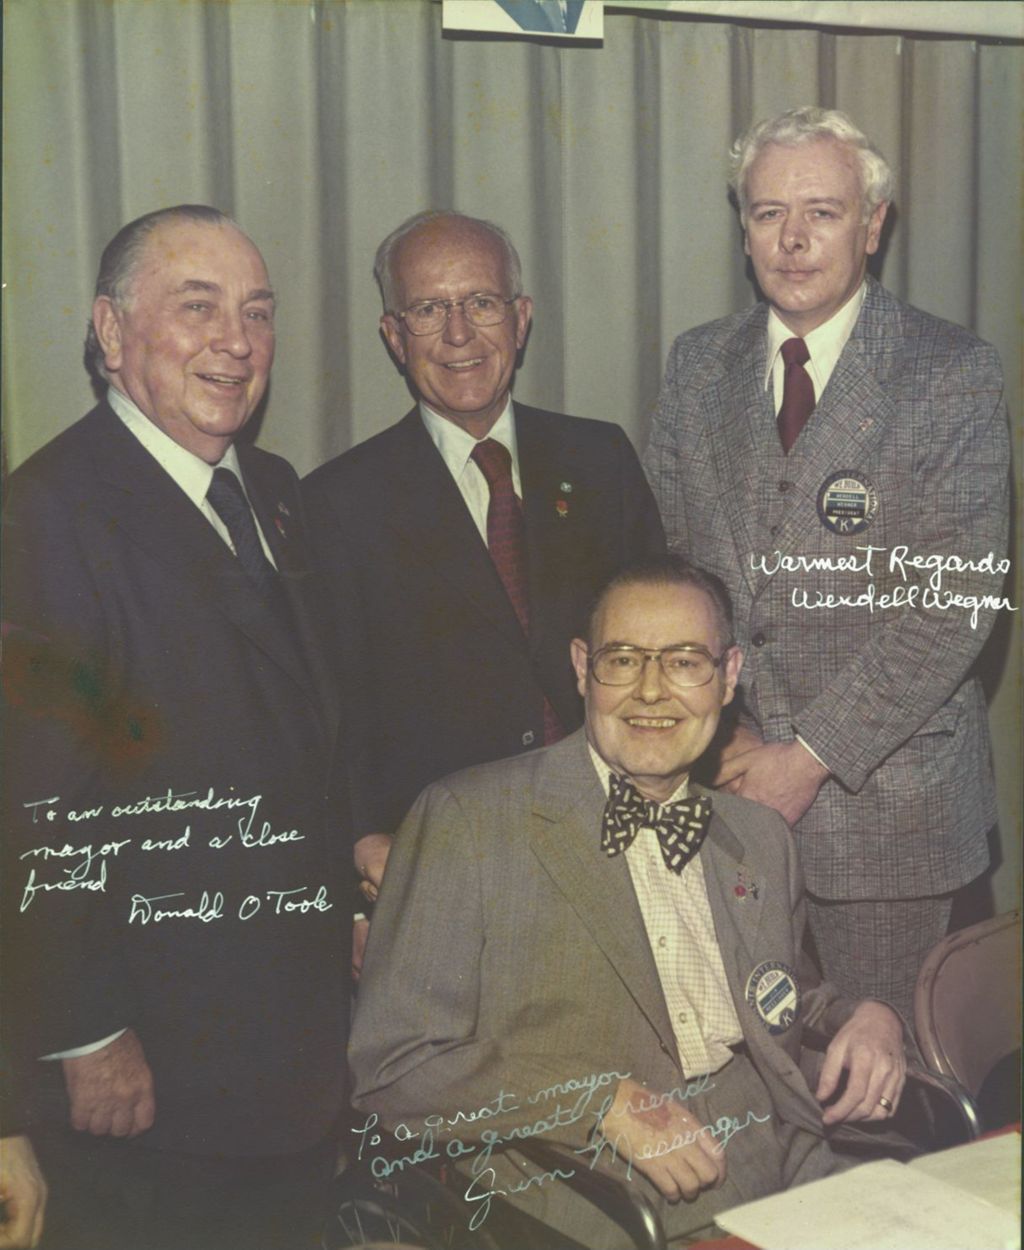 Miniature of Richard J. Daley, Jim Messinger, Wendell Wegner, and Donald O'Toole